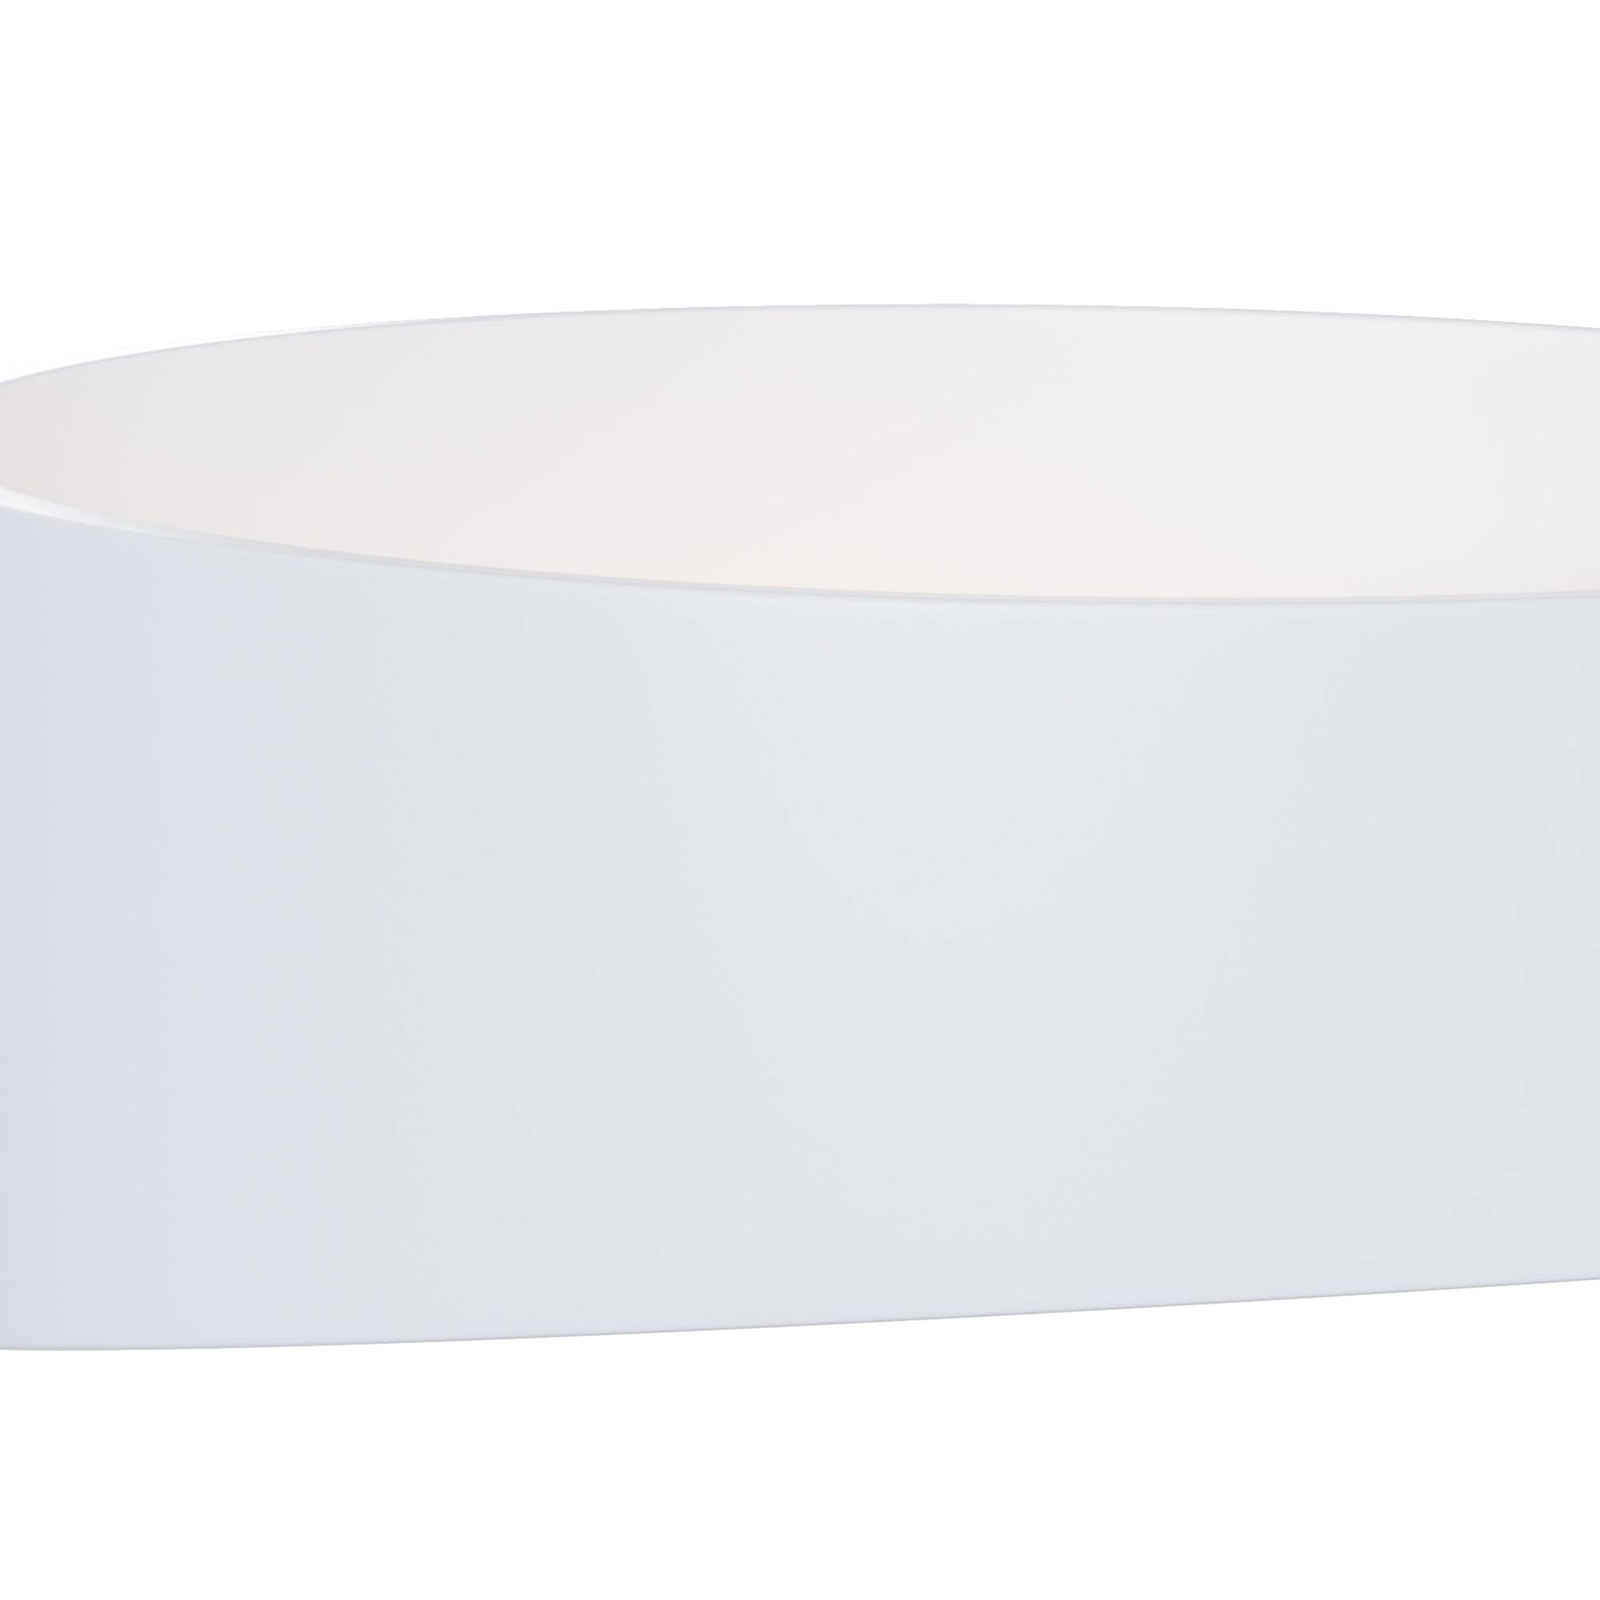 Applique LED Trame, forma ovale, bianco